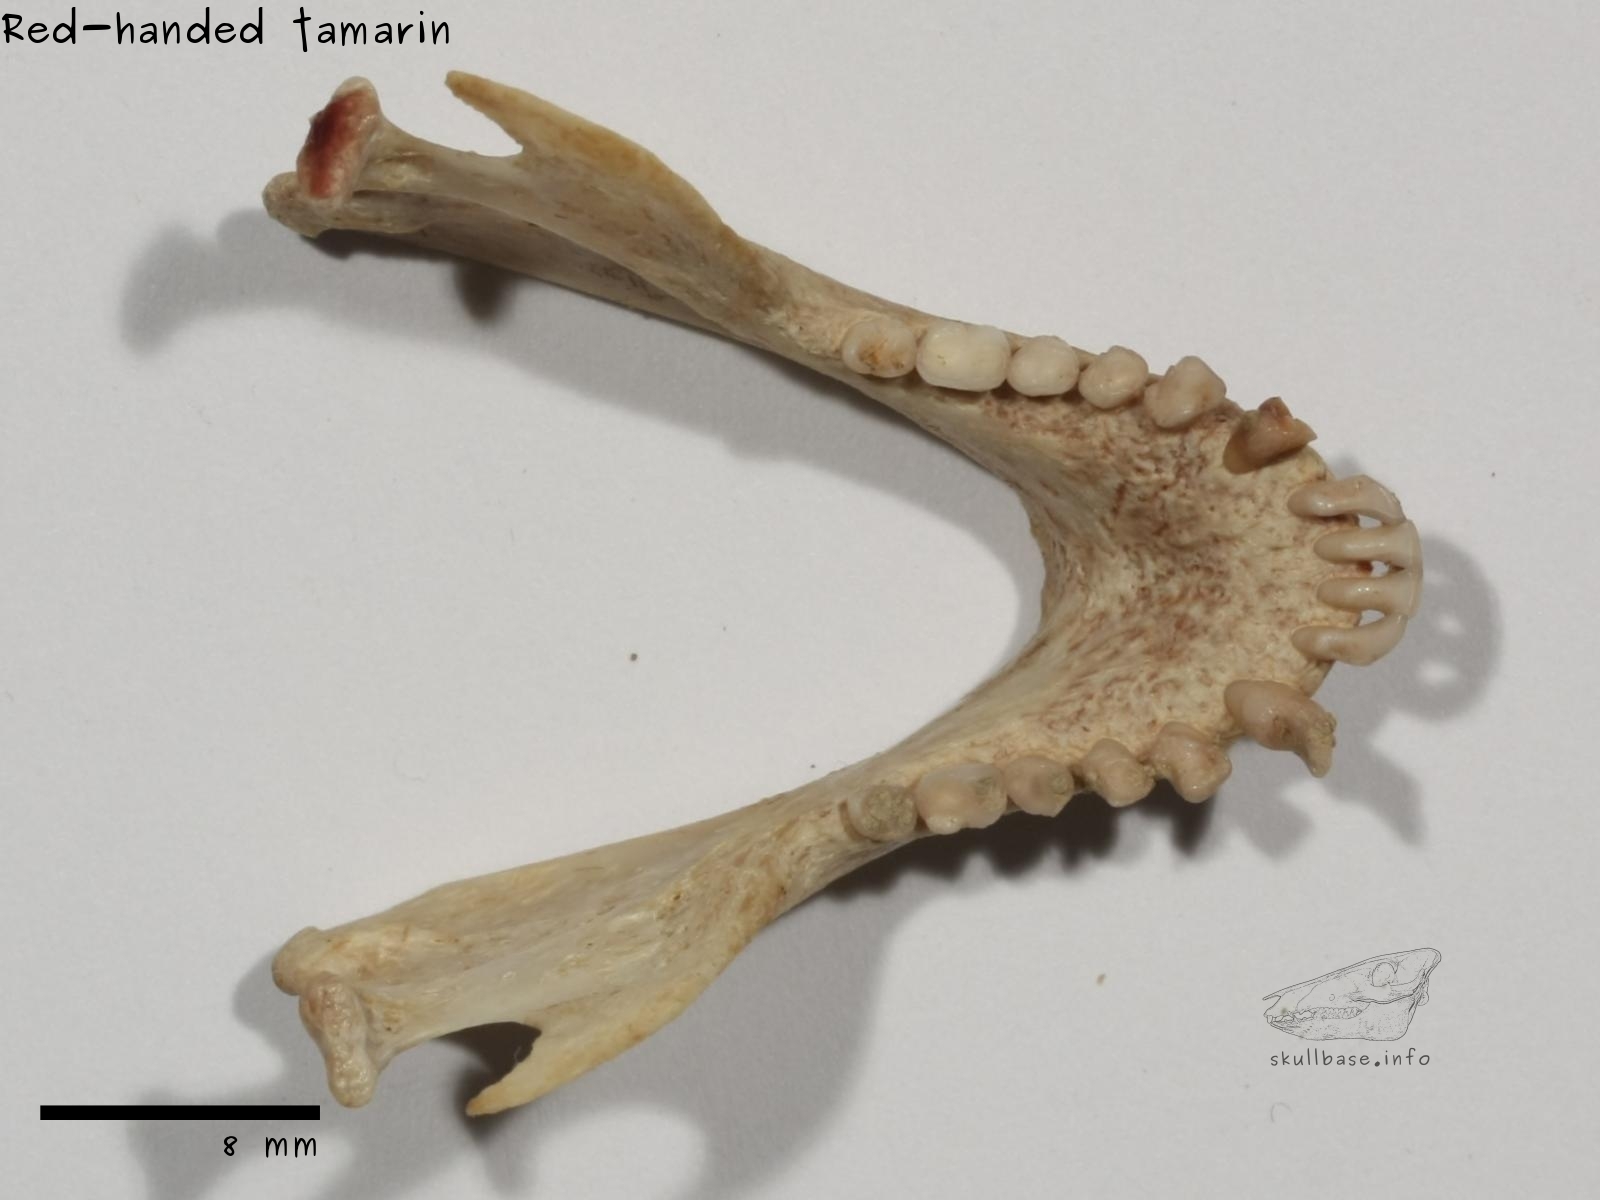 Red-handed tamarin (Saguinus midas) jaw